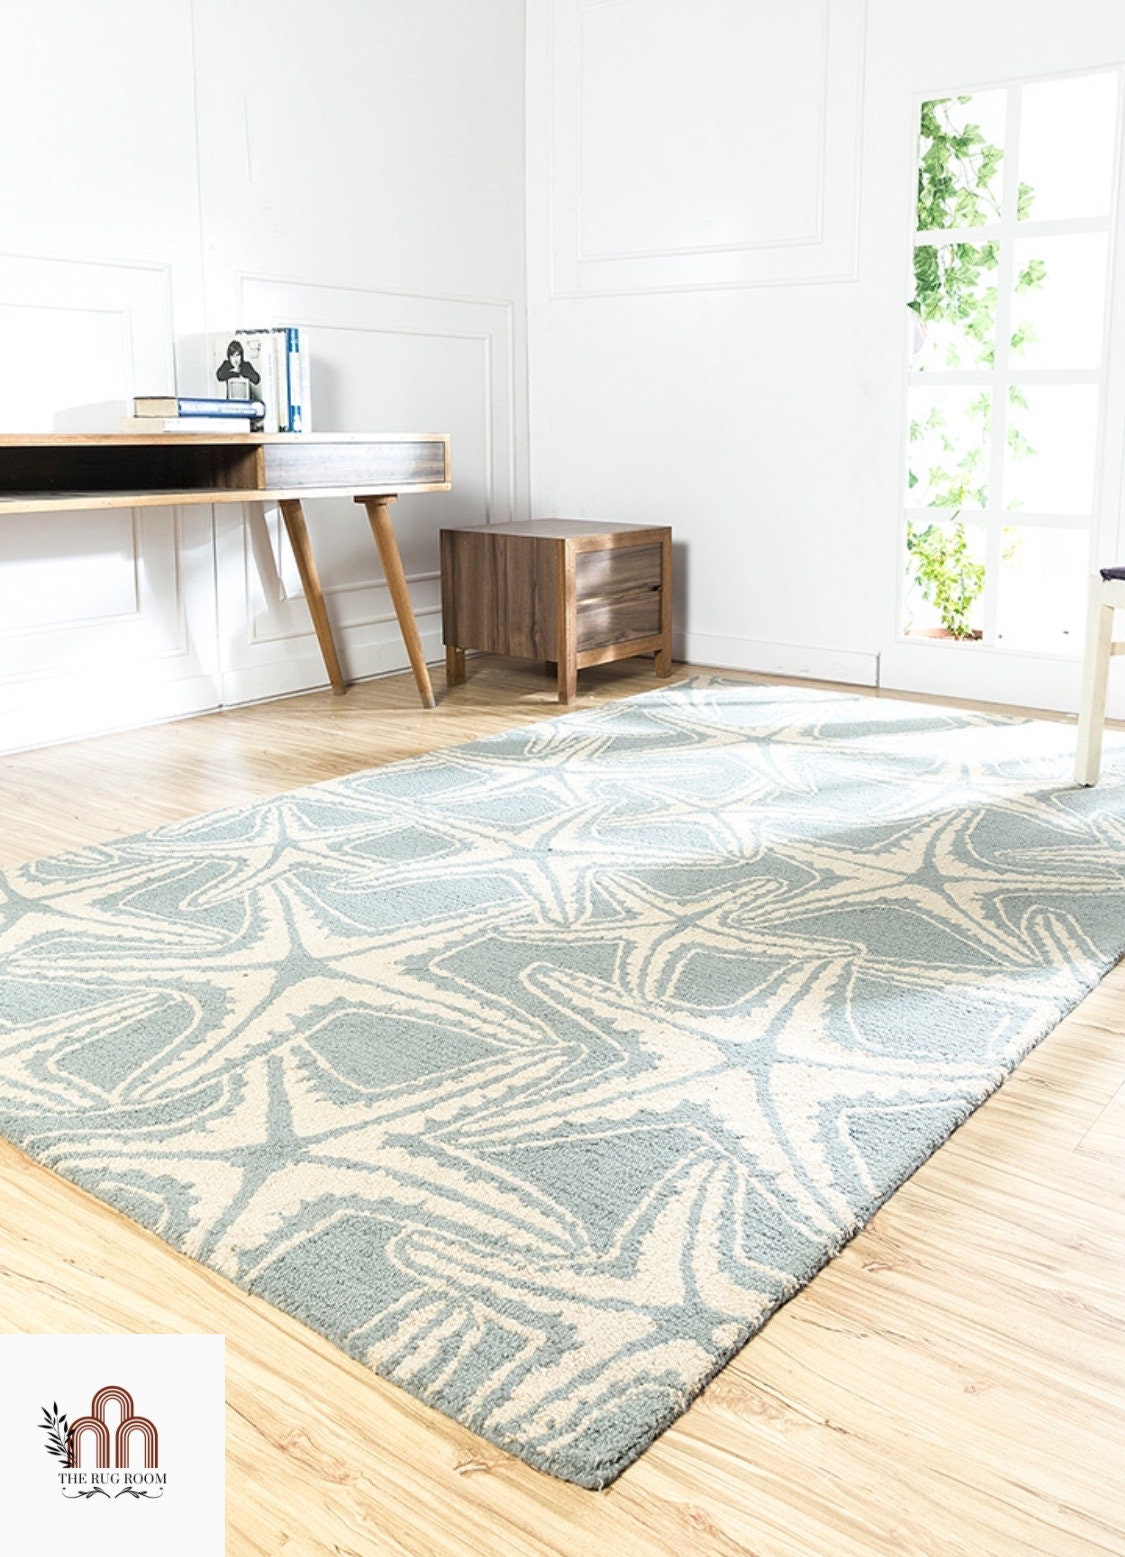 Modern & designer carpets: High-quality and cheap at carpet dreams -  Teppich-Traum